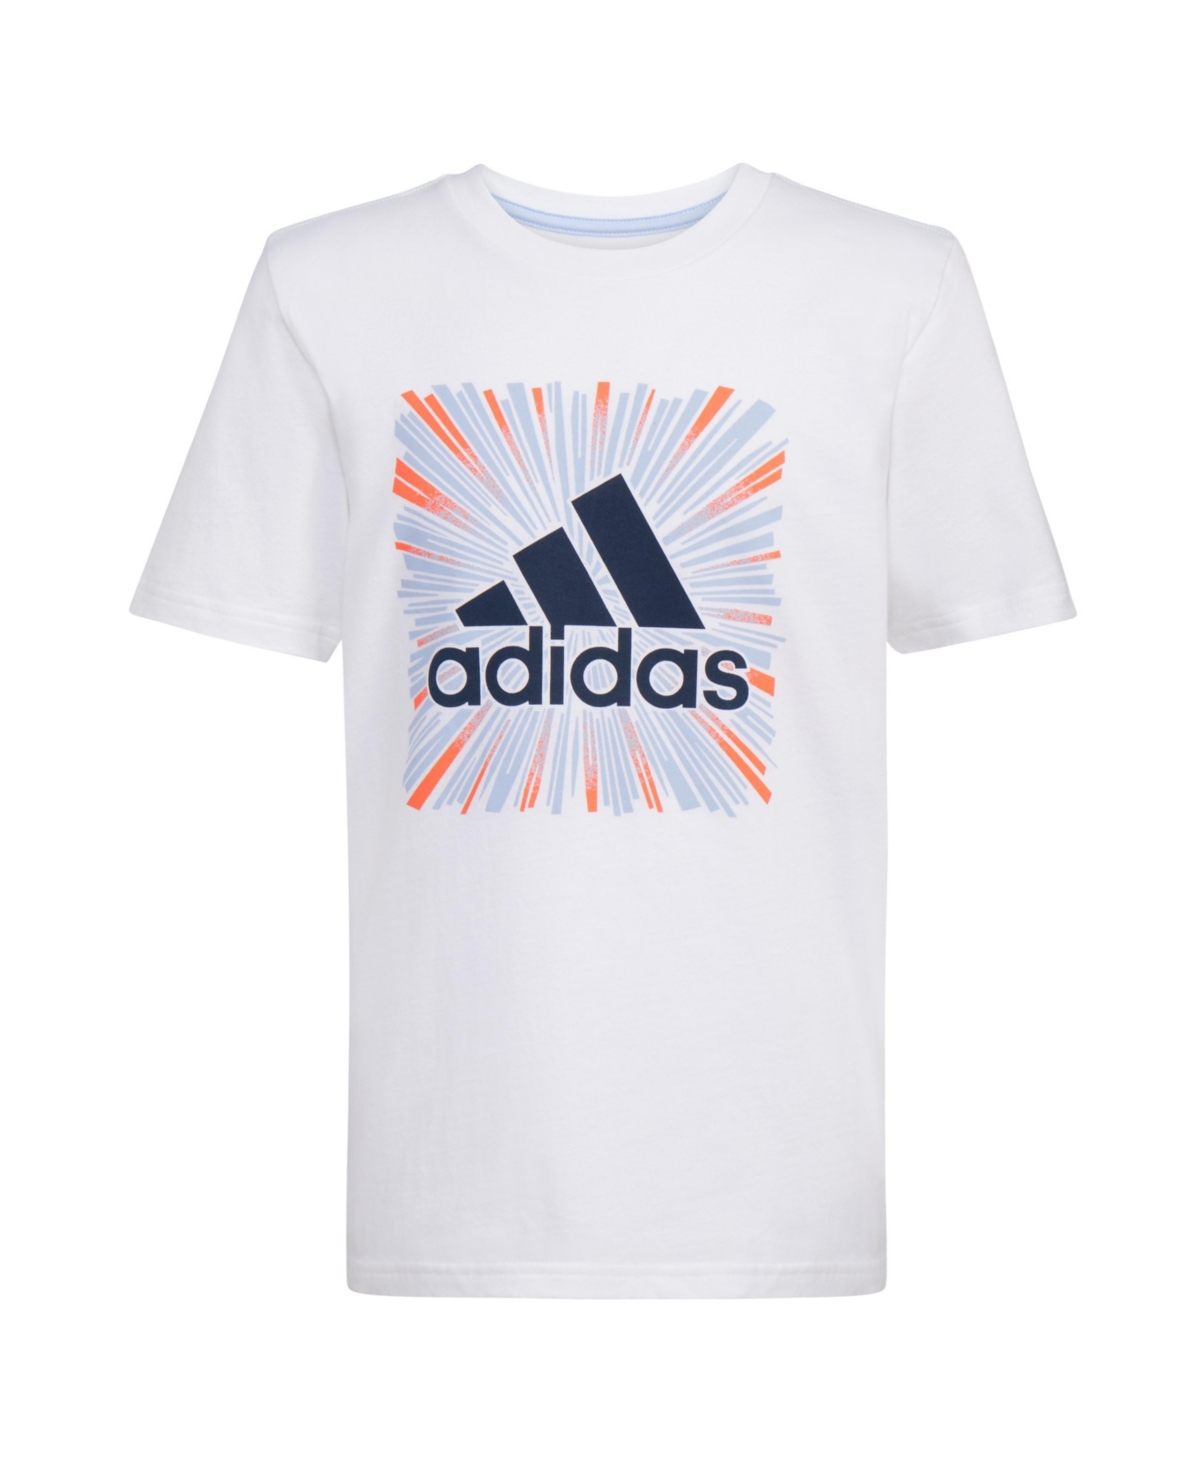 Adidas Originals Adidas Big Boys Short Sleeves Optimist Sport T-shirt In White With Orange